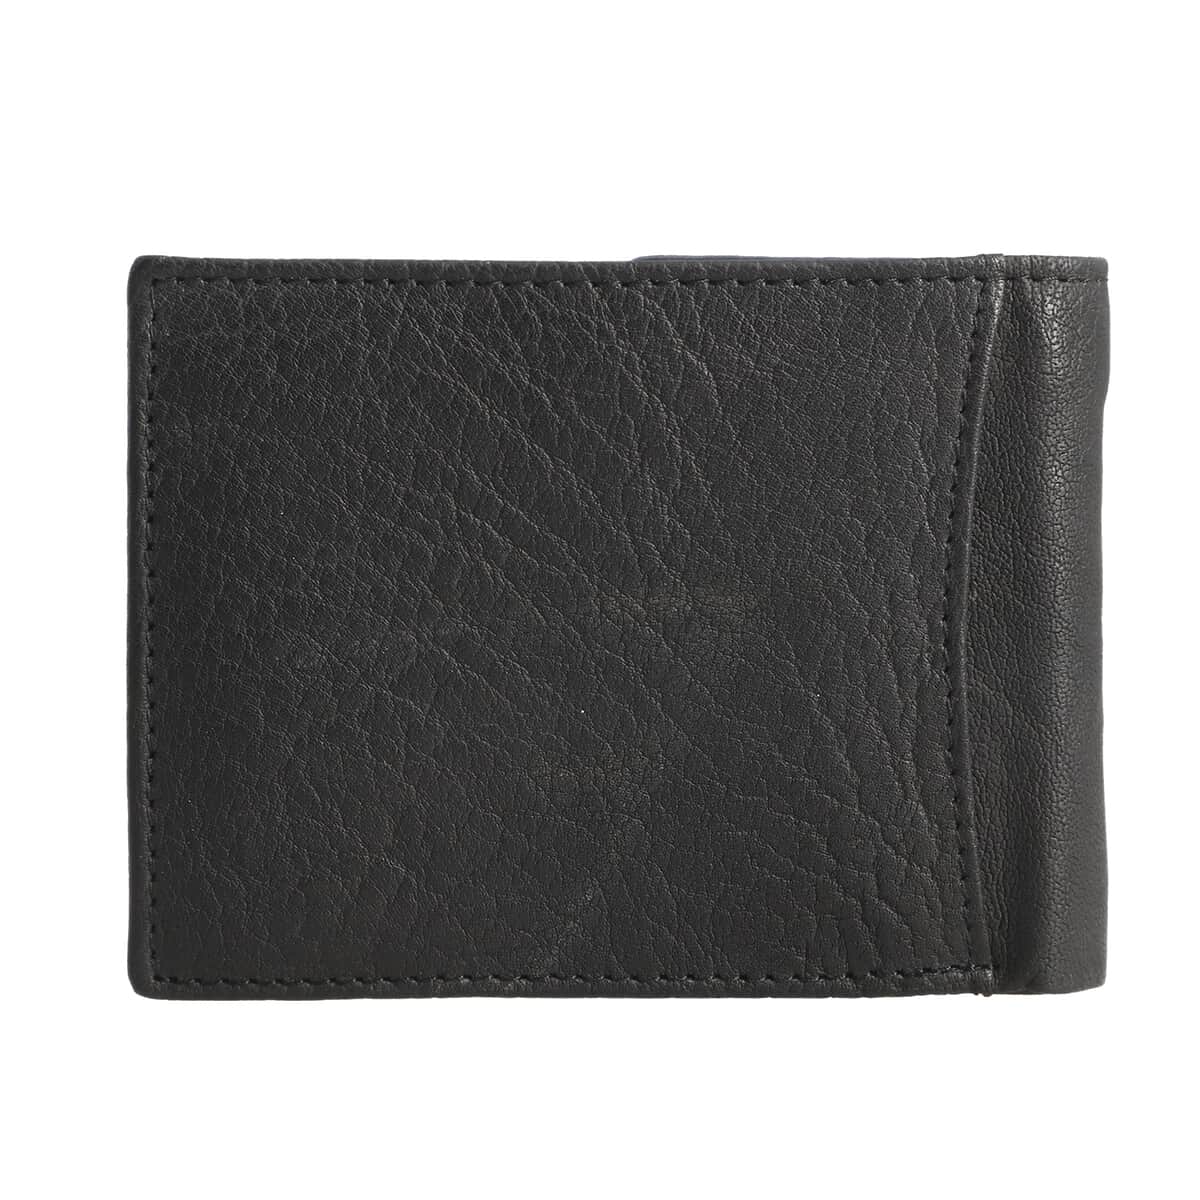 Buy PASSAGE Black Genuine Leather RFID Bi-Fold Men's Wallet at ShopLC.